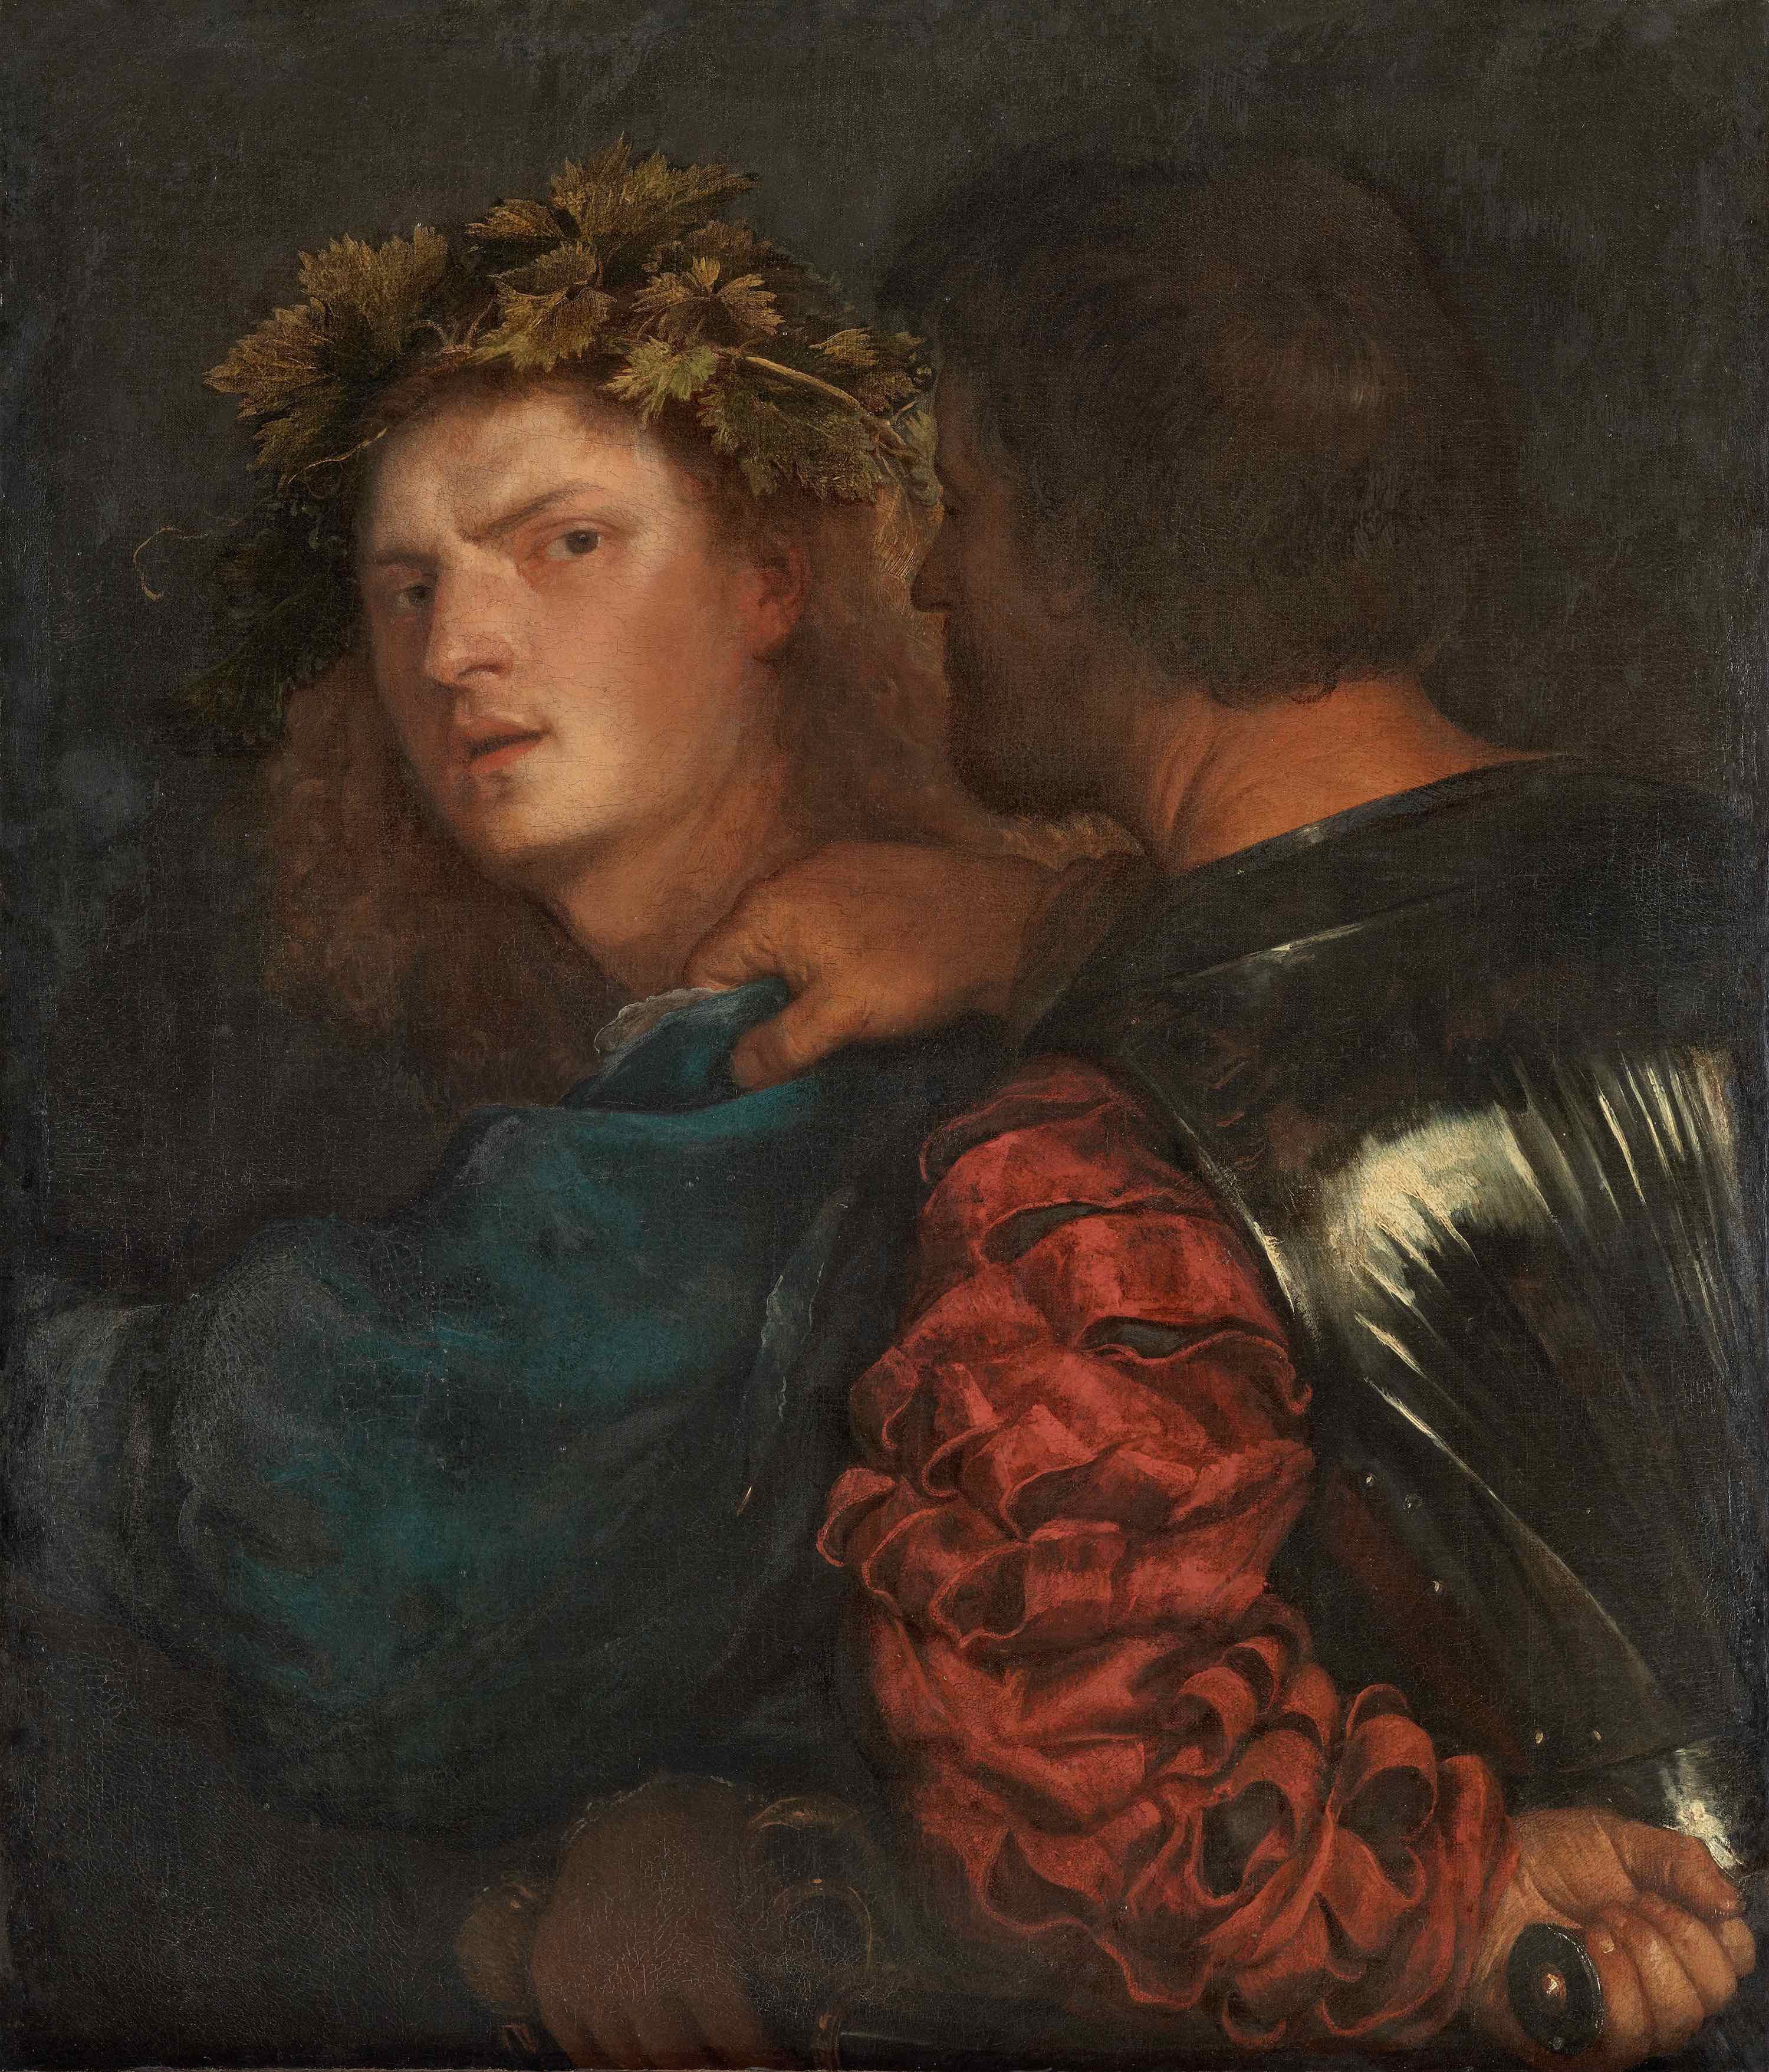 El bravo by  Tiziano - c. 1520 - 77 x 66.5 cm Kunsthistorisches Museum